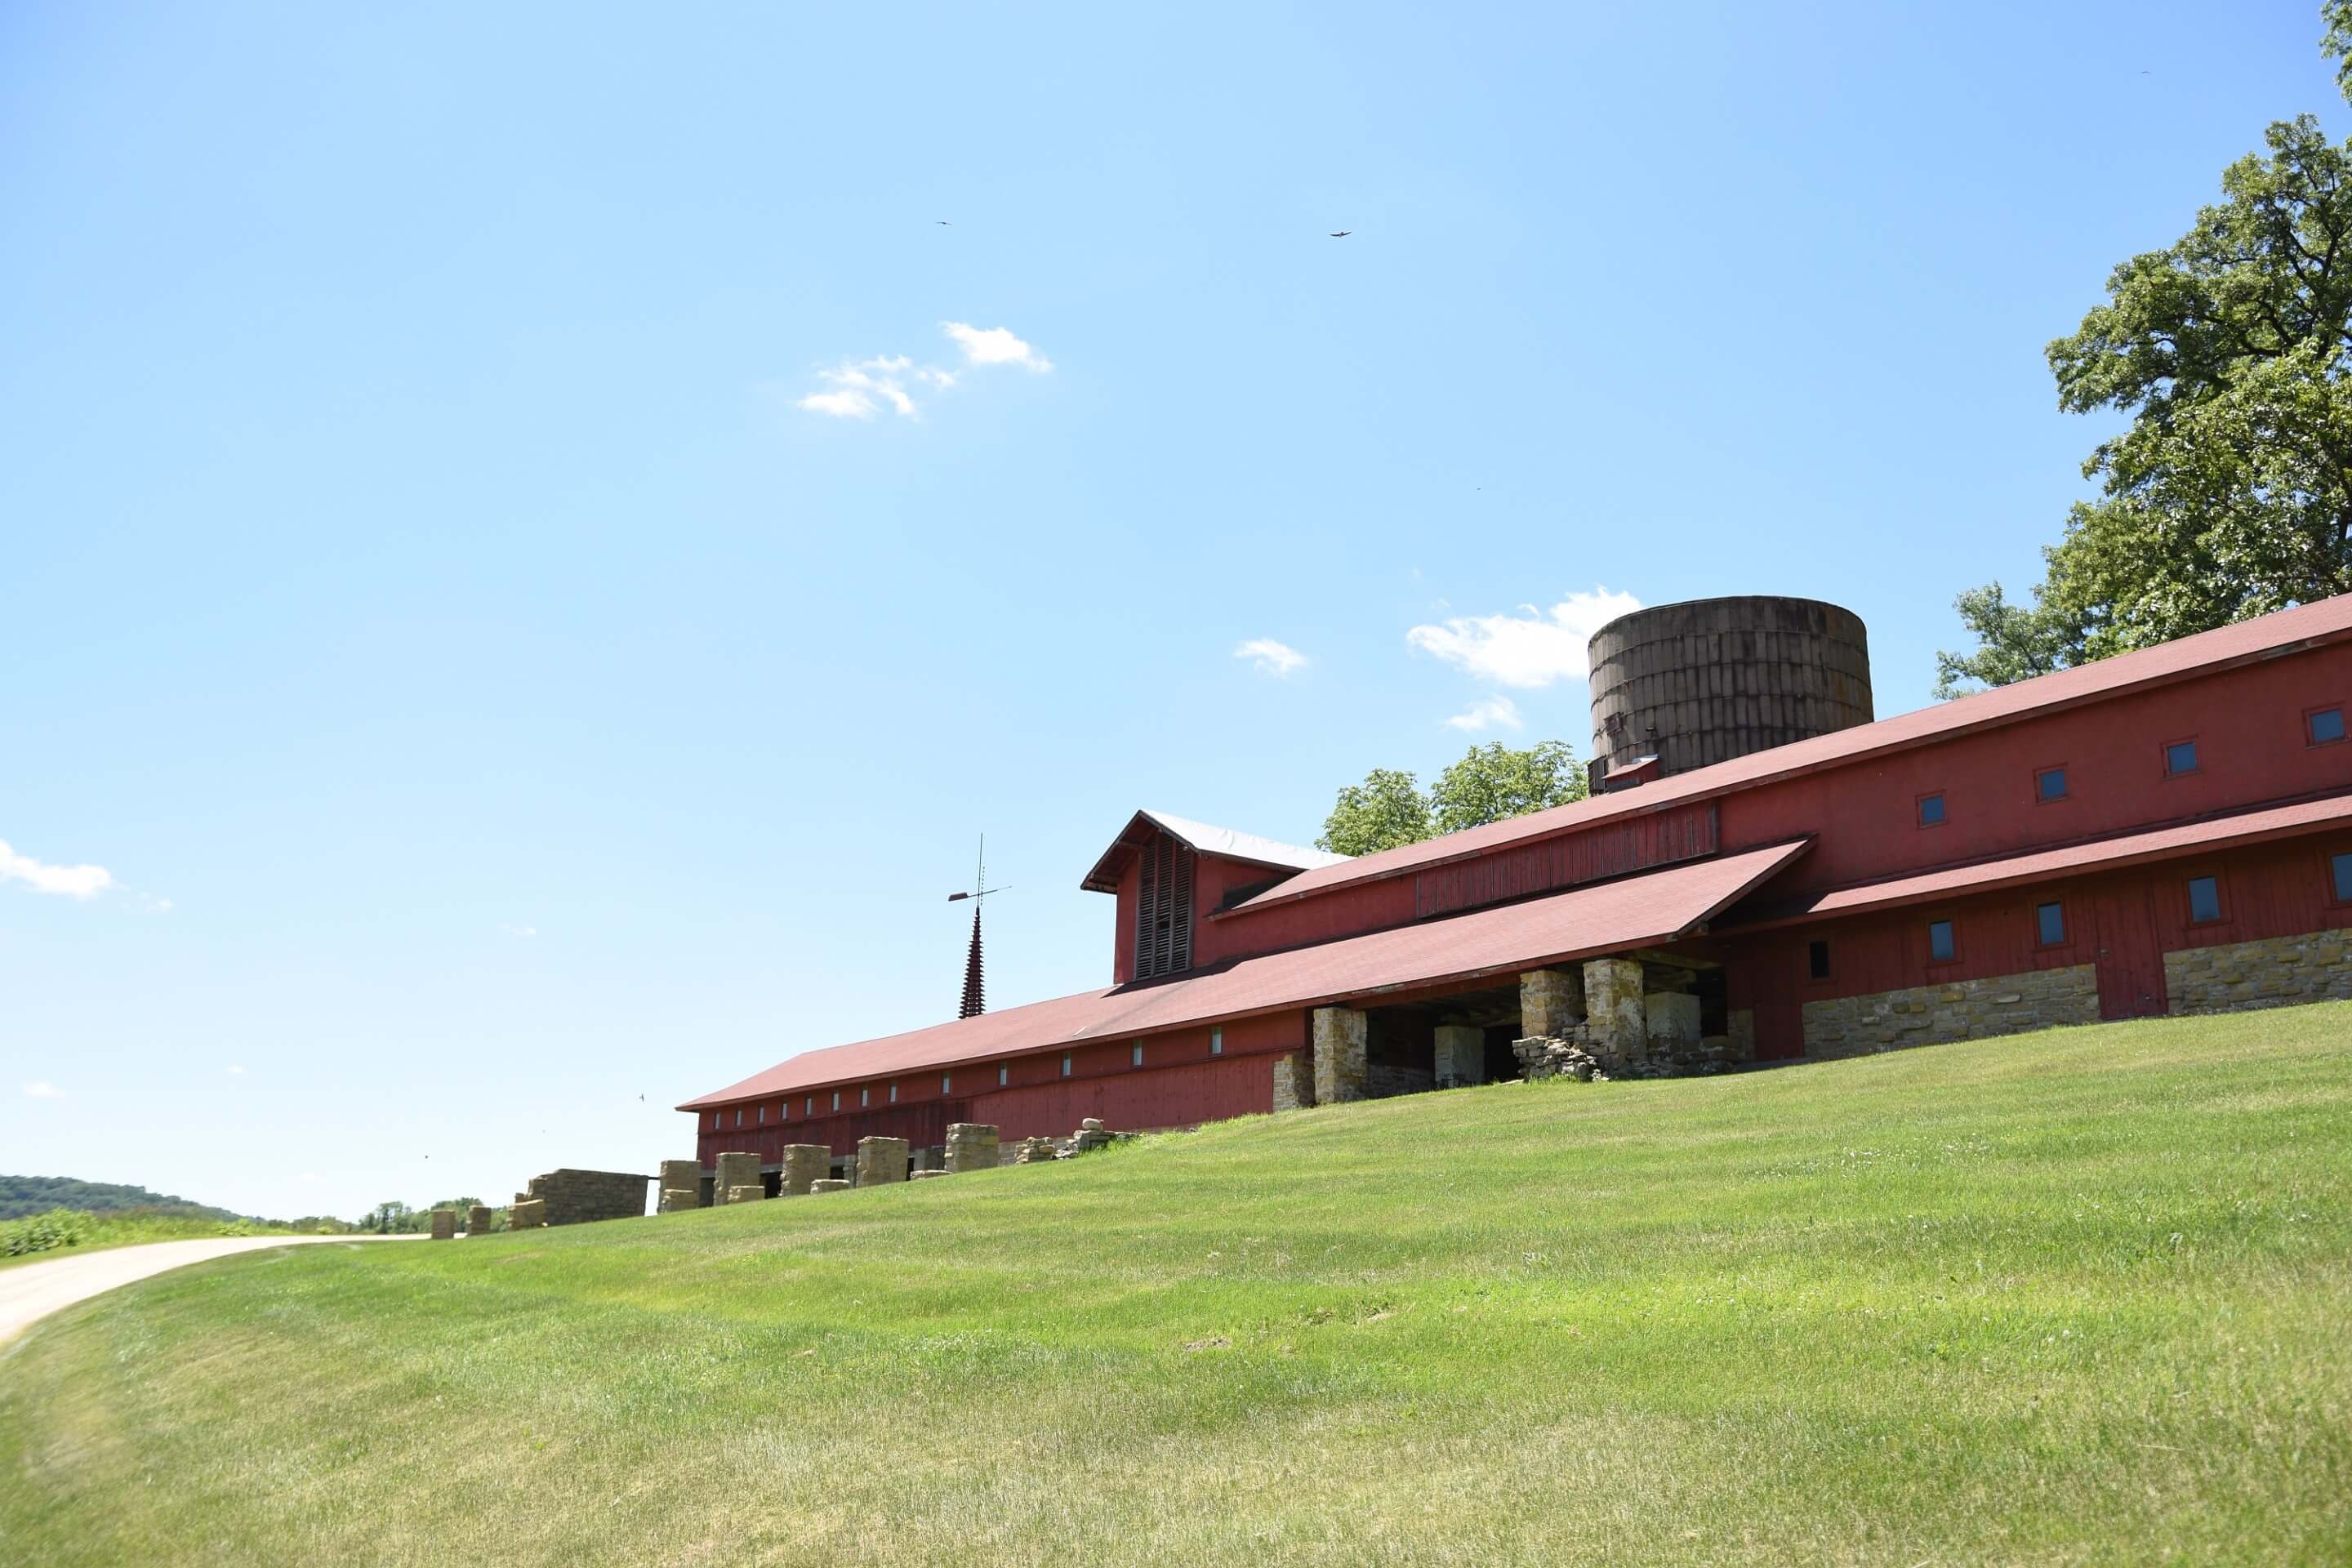 photo of a historic barn building at Frank Lloyd Wright's Taliesin